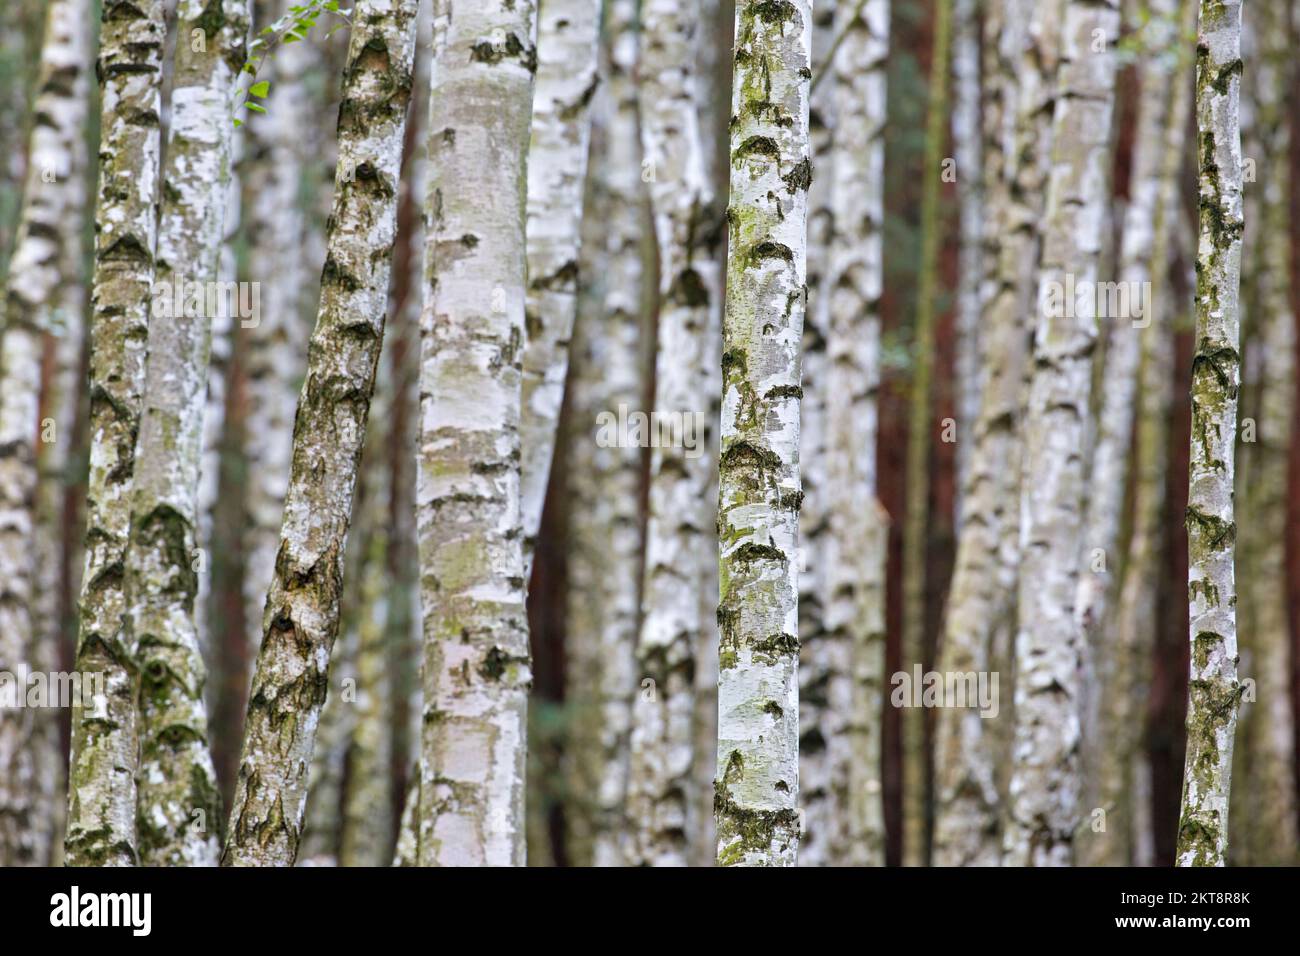 Betulla argentata / betulla verrucosa / betulla bianca europea (Betula pendula / Betula verrucosa) tronchi di betulla in foresta decidua in autunno Foto Stock